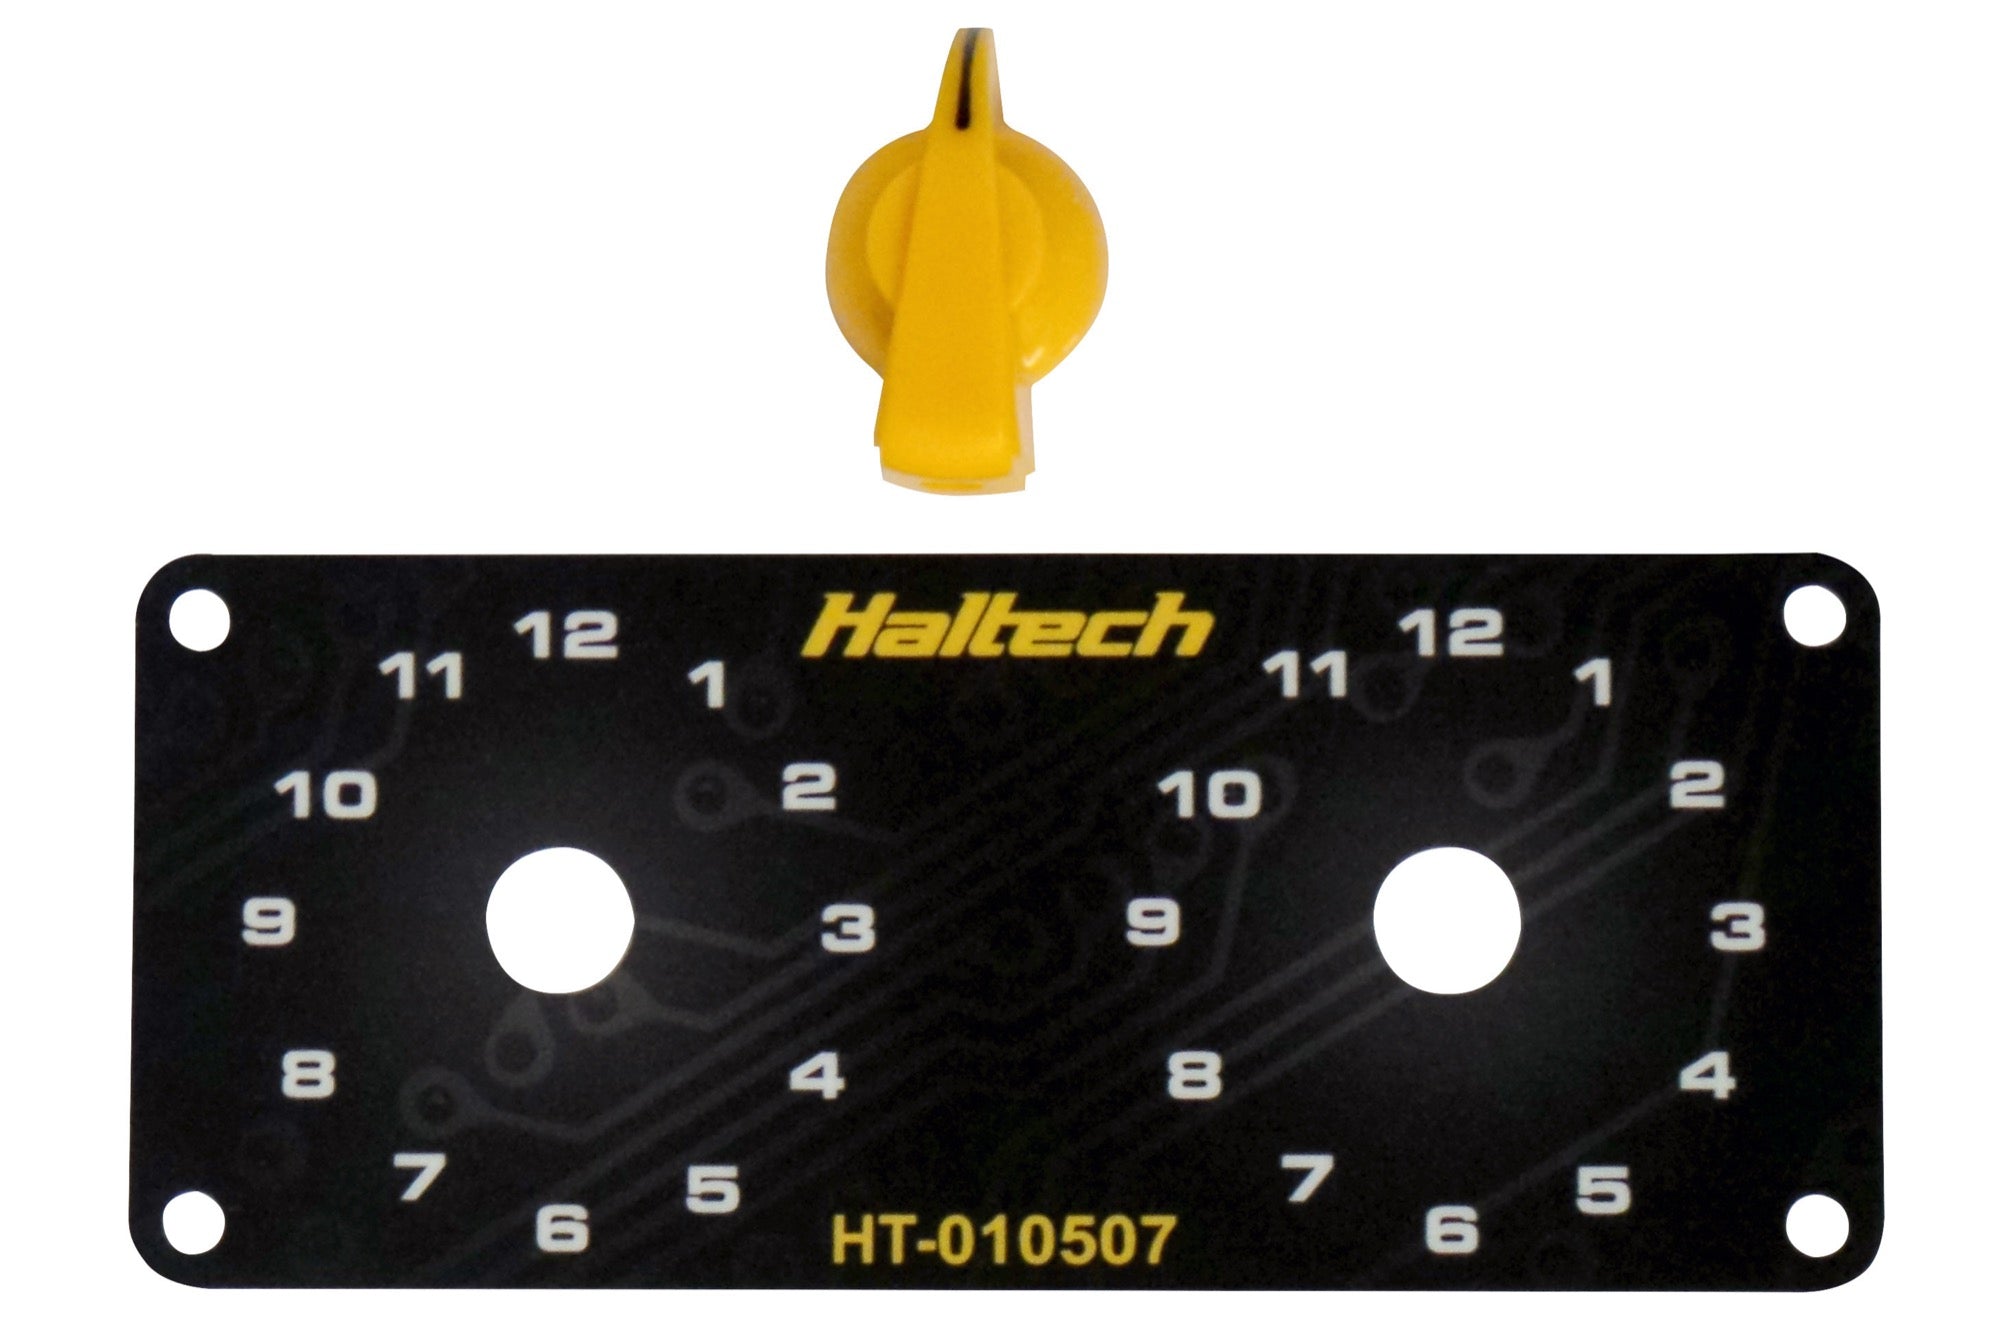 Haltech Dual Switch Panel Kit - includes Yellow knob HT-010509